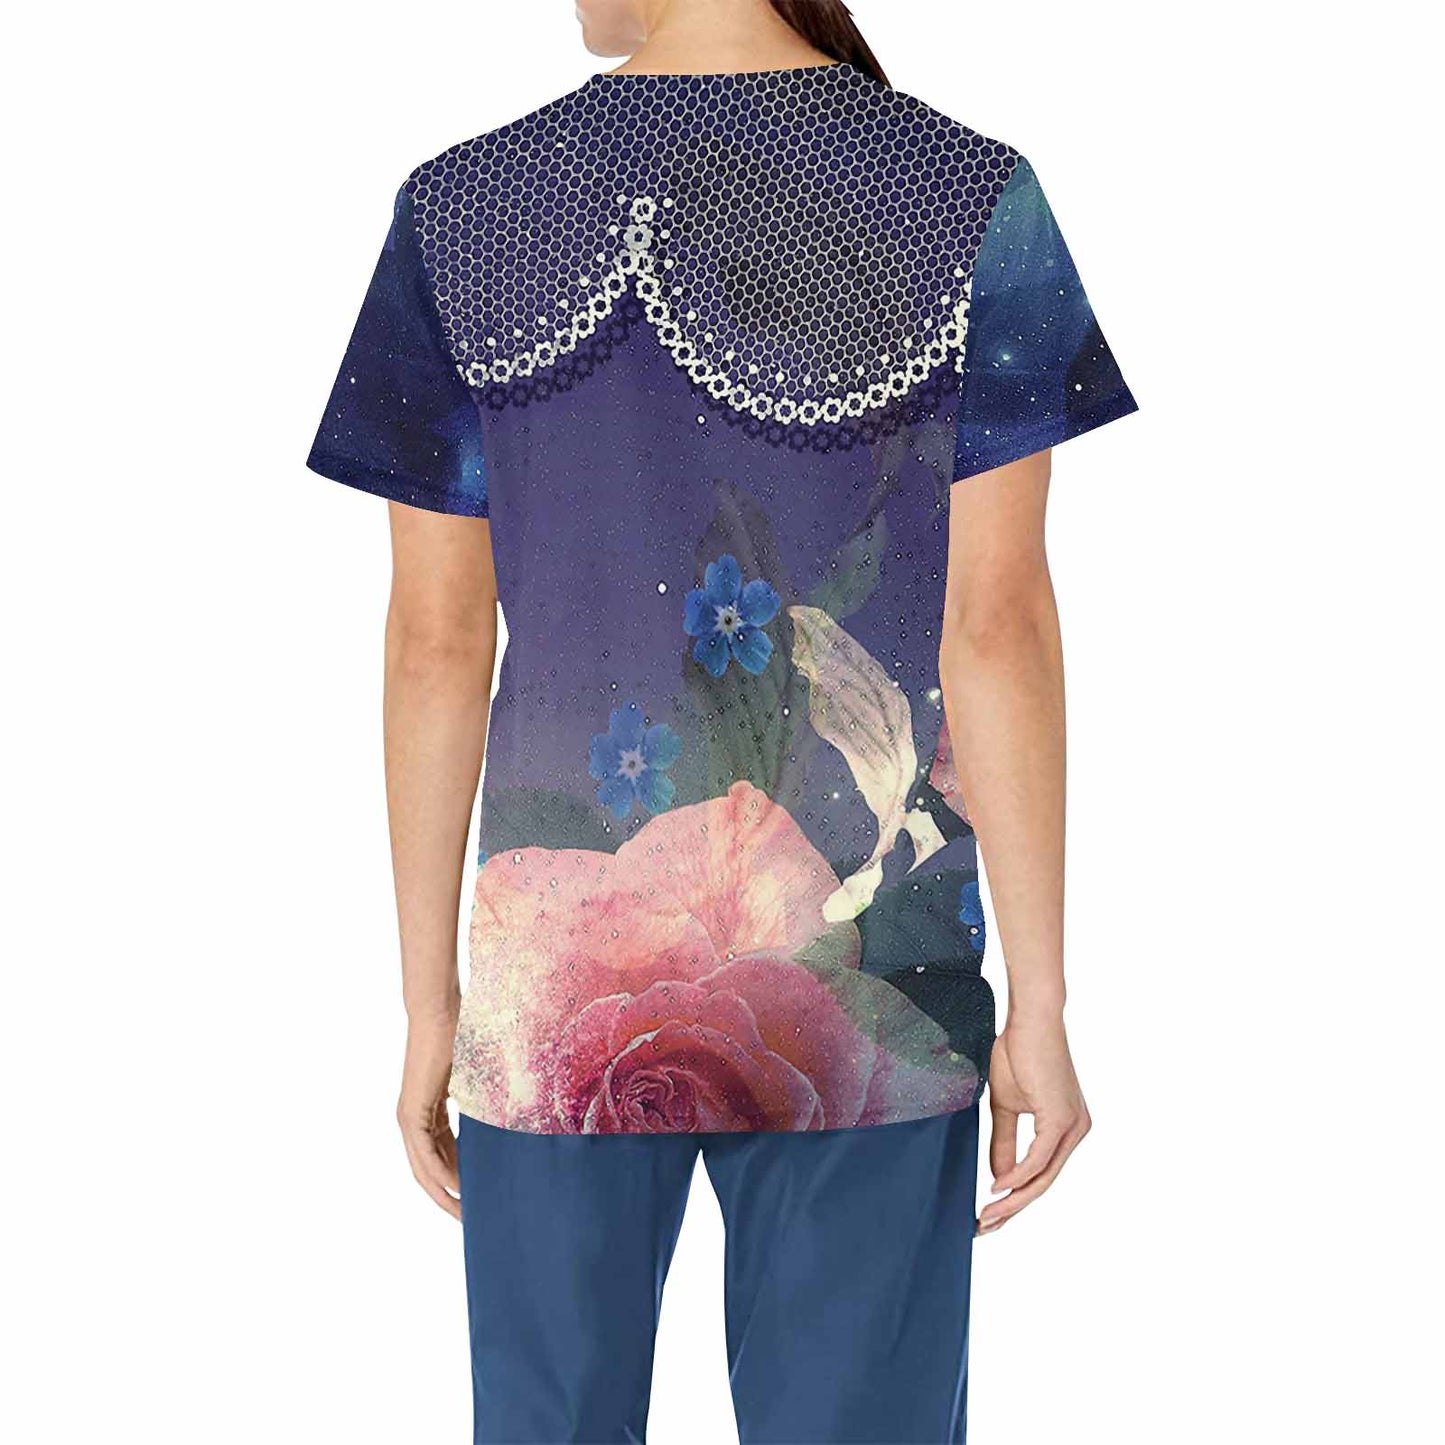 Victorian lace print professional scrubs, nurses scrub, unisex, design 02